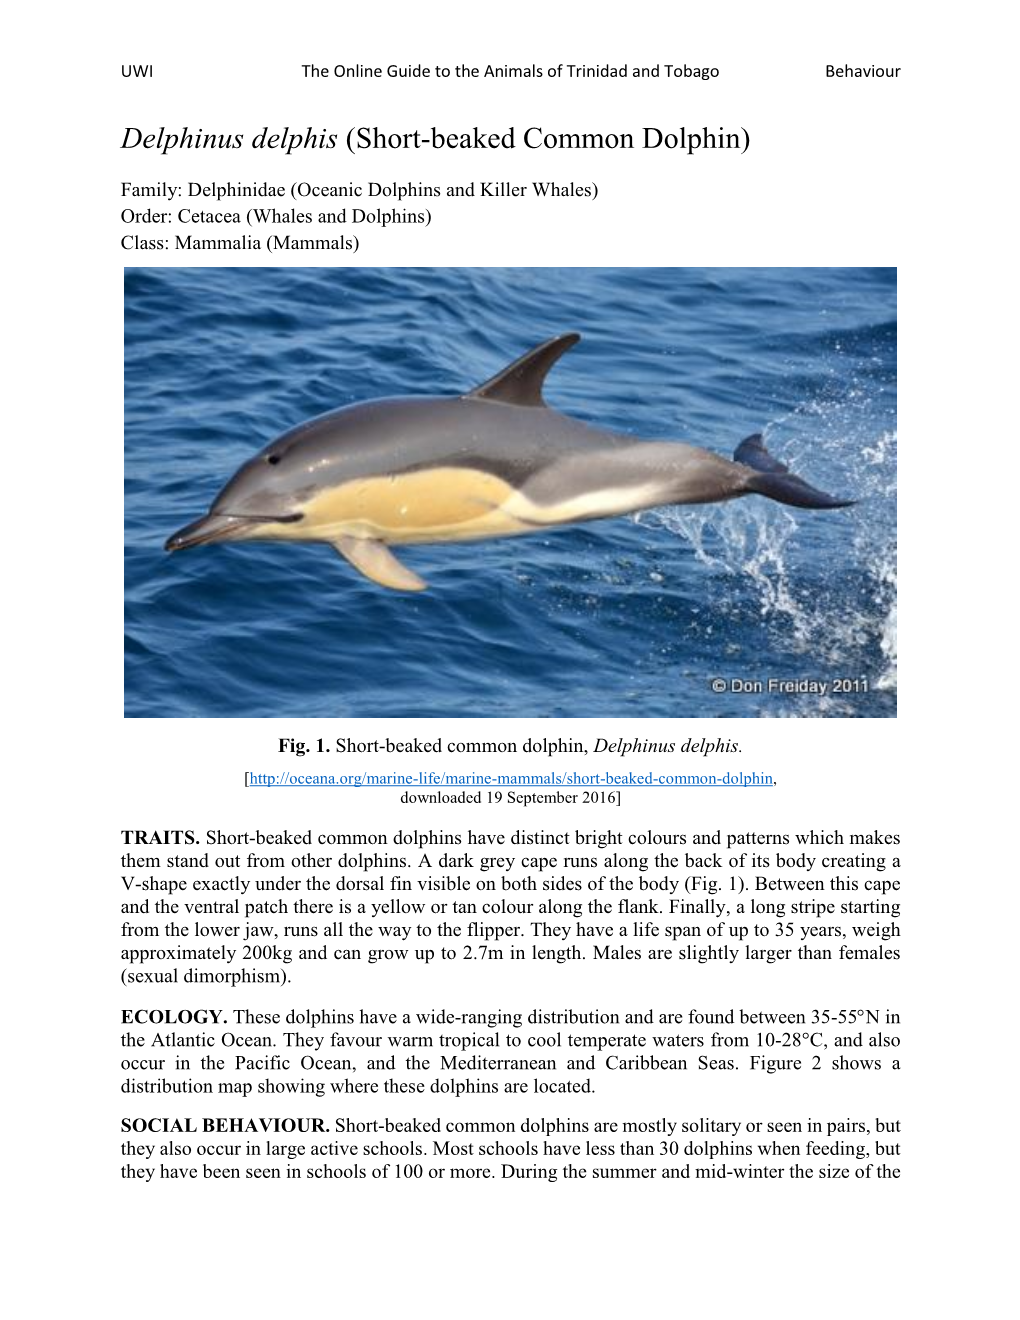 Delphinus Delphis (Short-Beaked Common Dolphin)